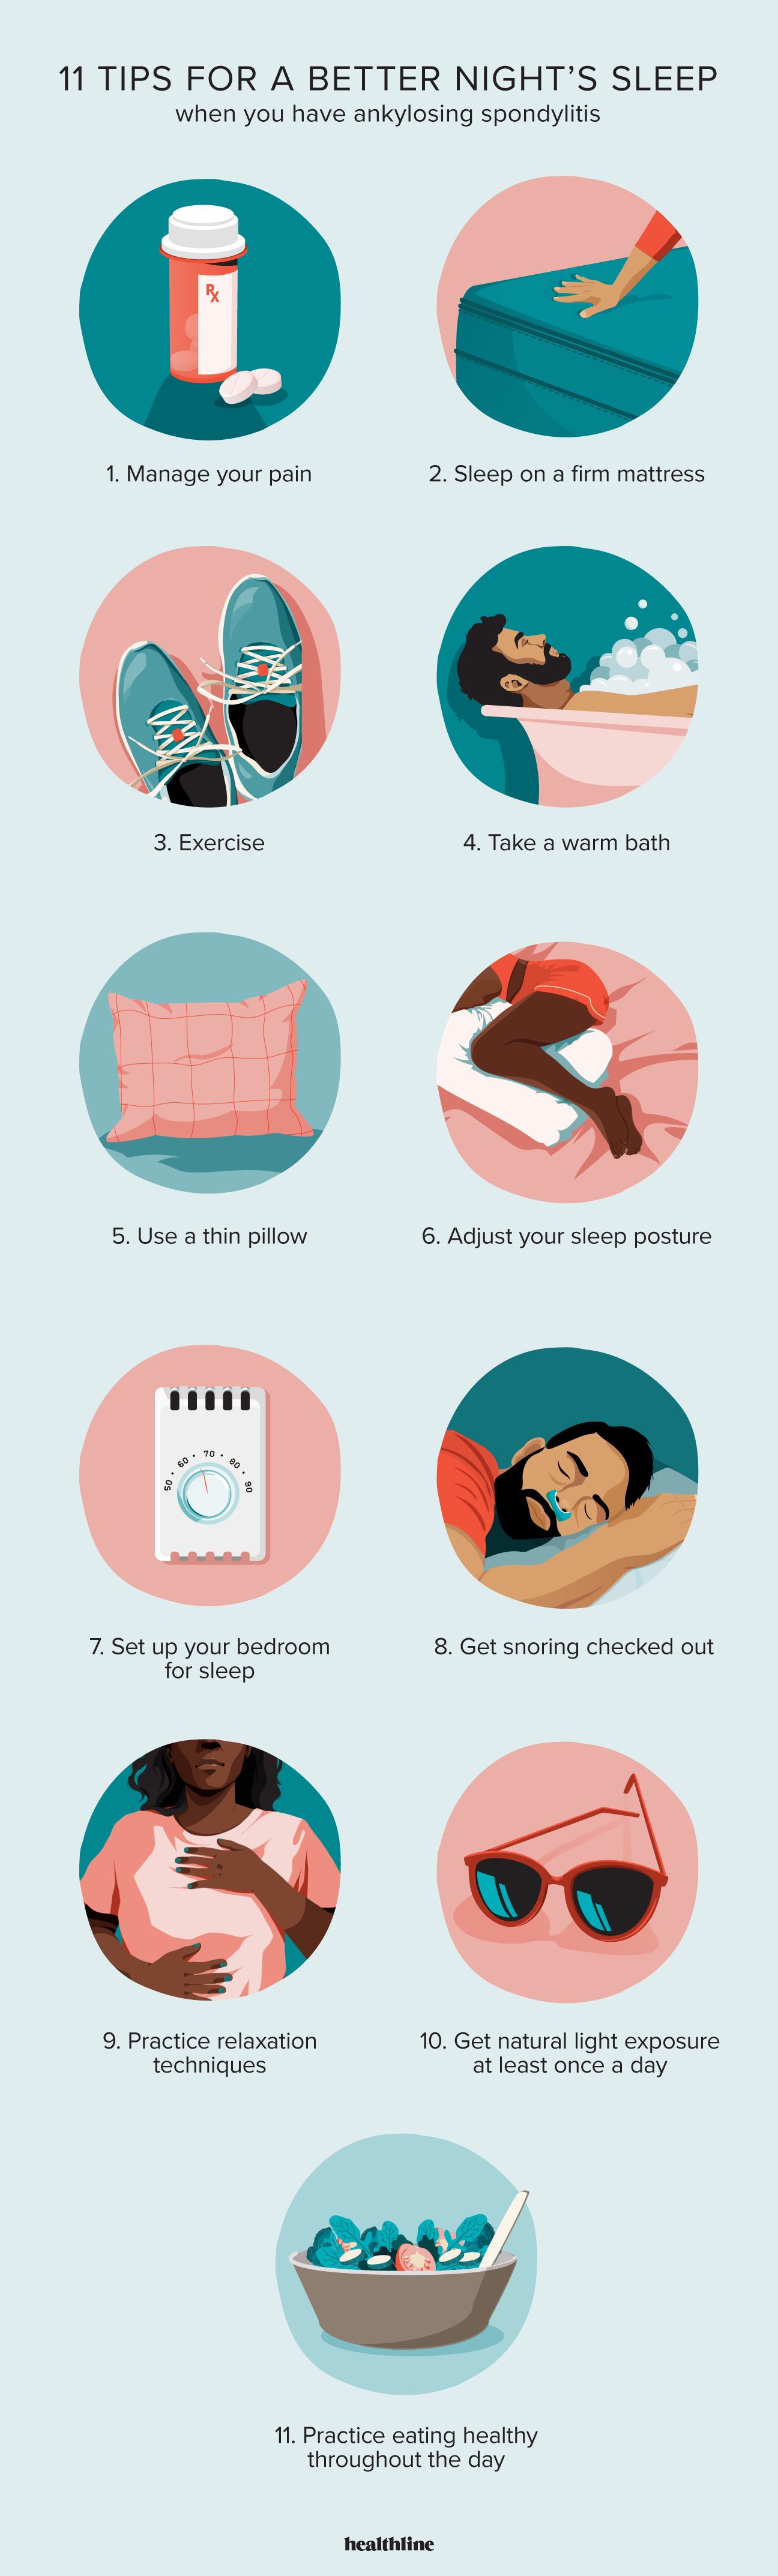 tips for better night's sleep infographic